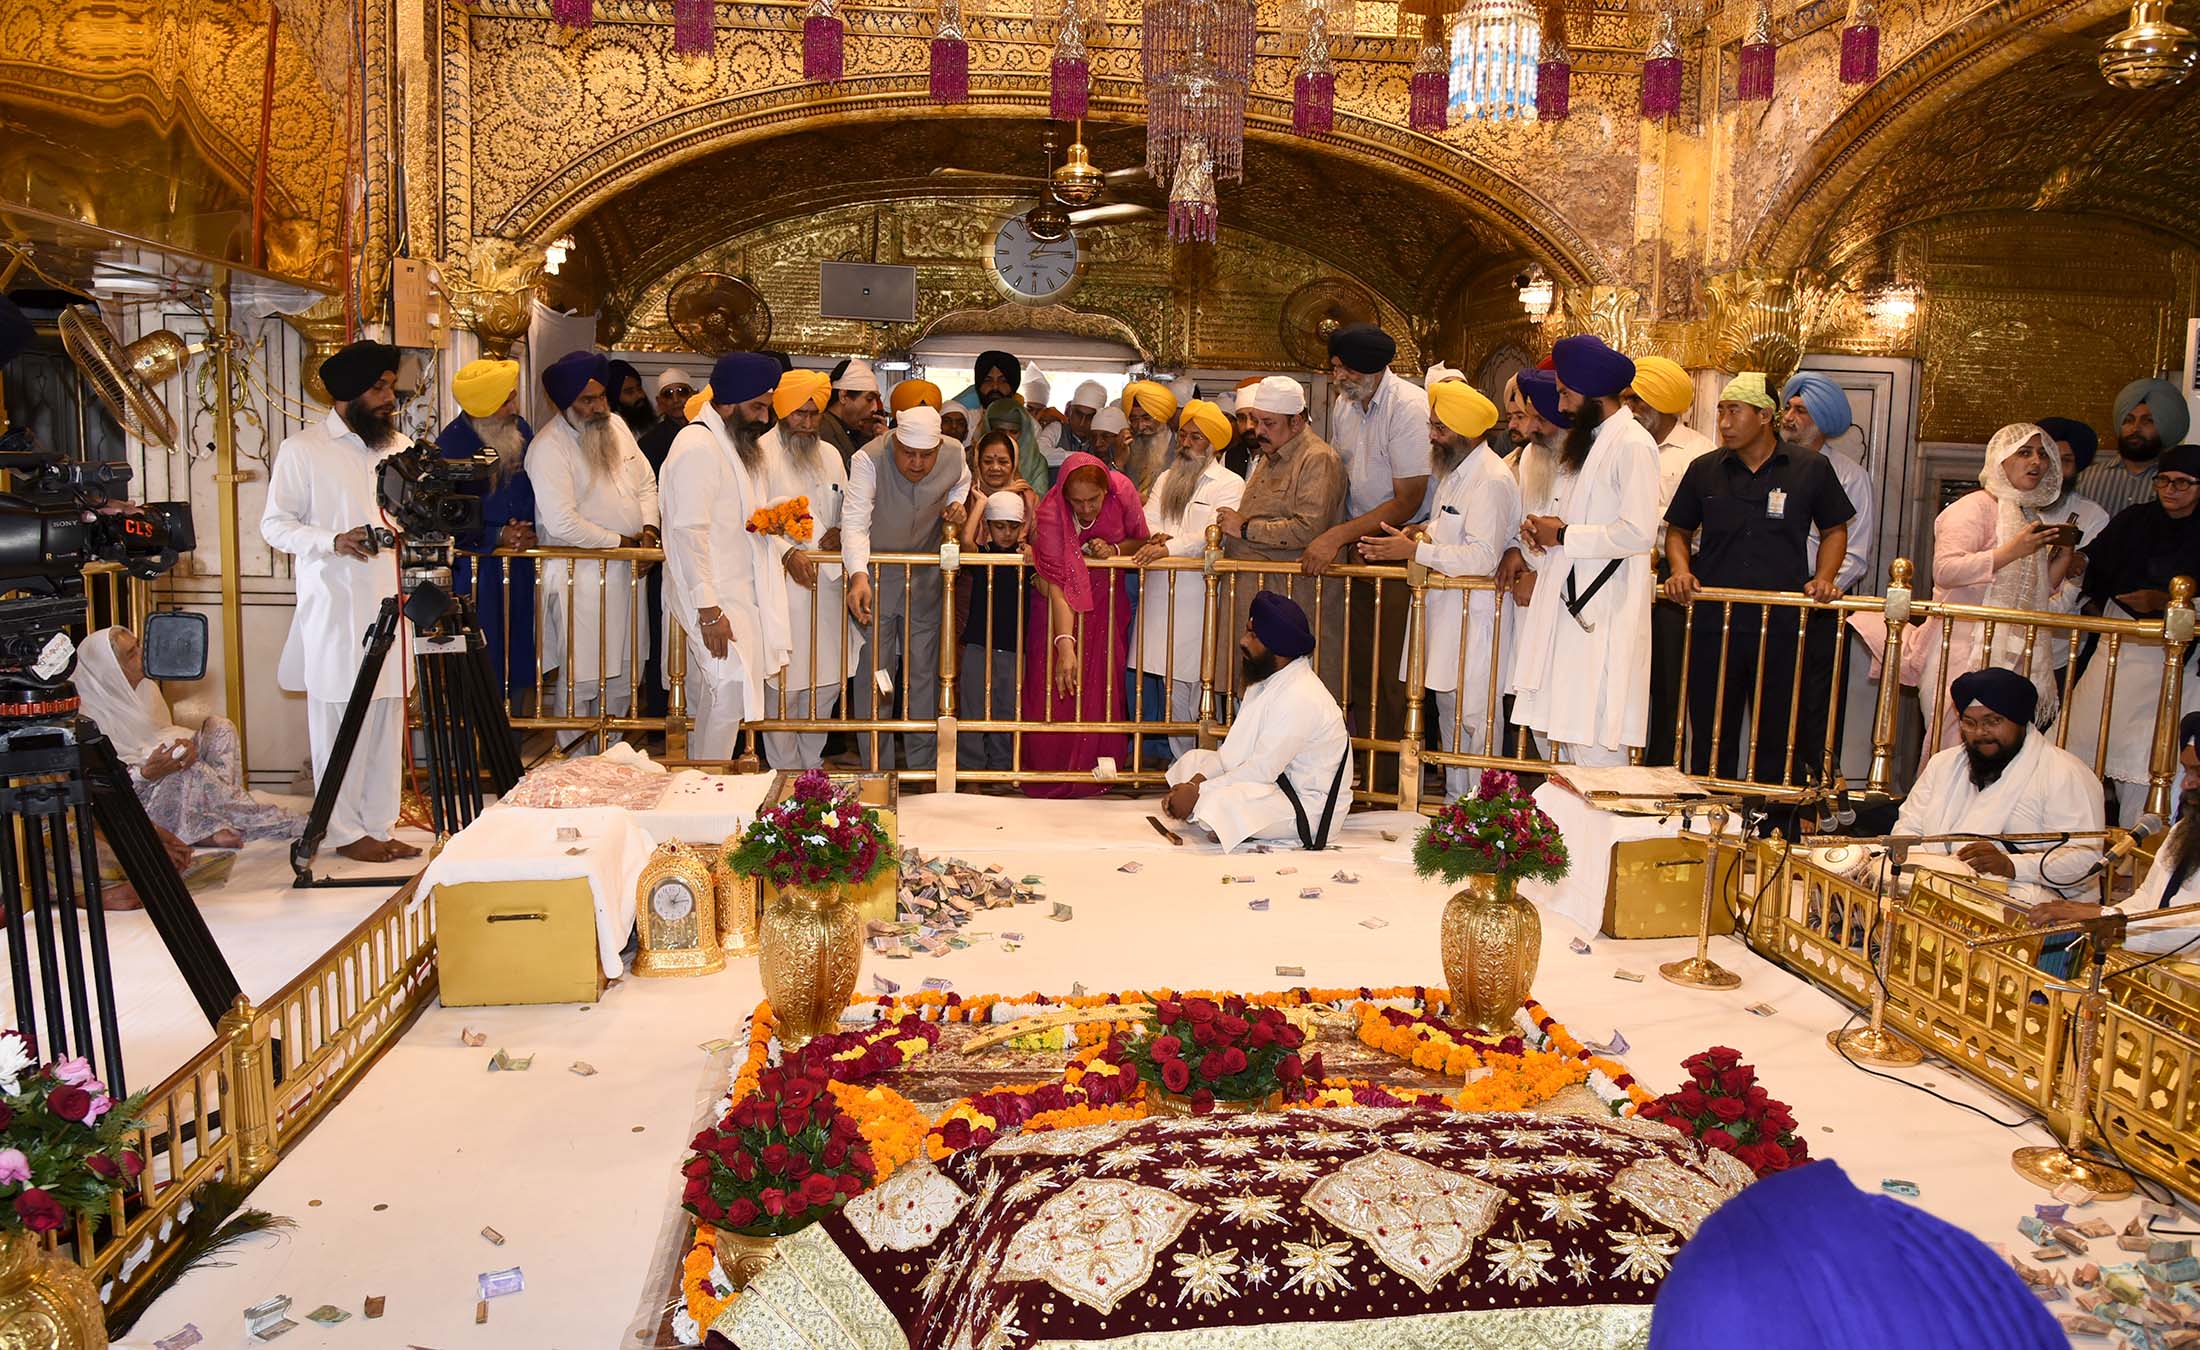 The Vice President, Shri Jagdeep Dhankhar & Dr Sudesh Dhankhar visiting the Golden Temple in Amritsar on October 26, 2022